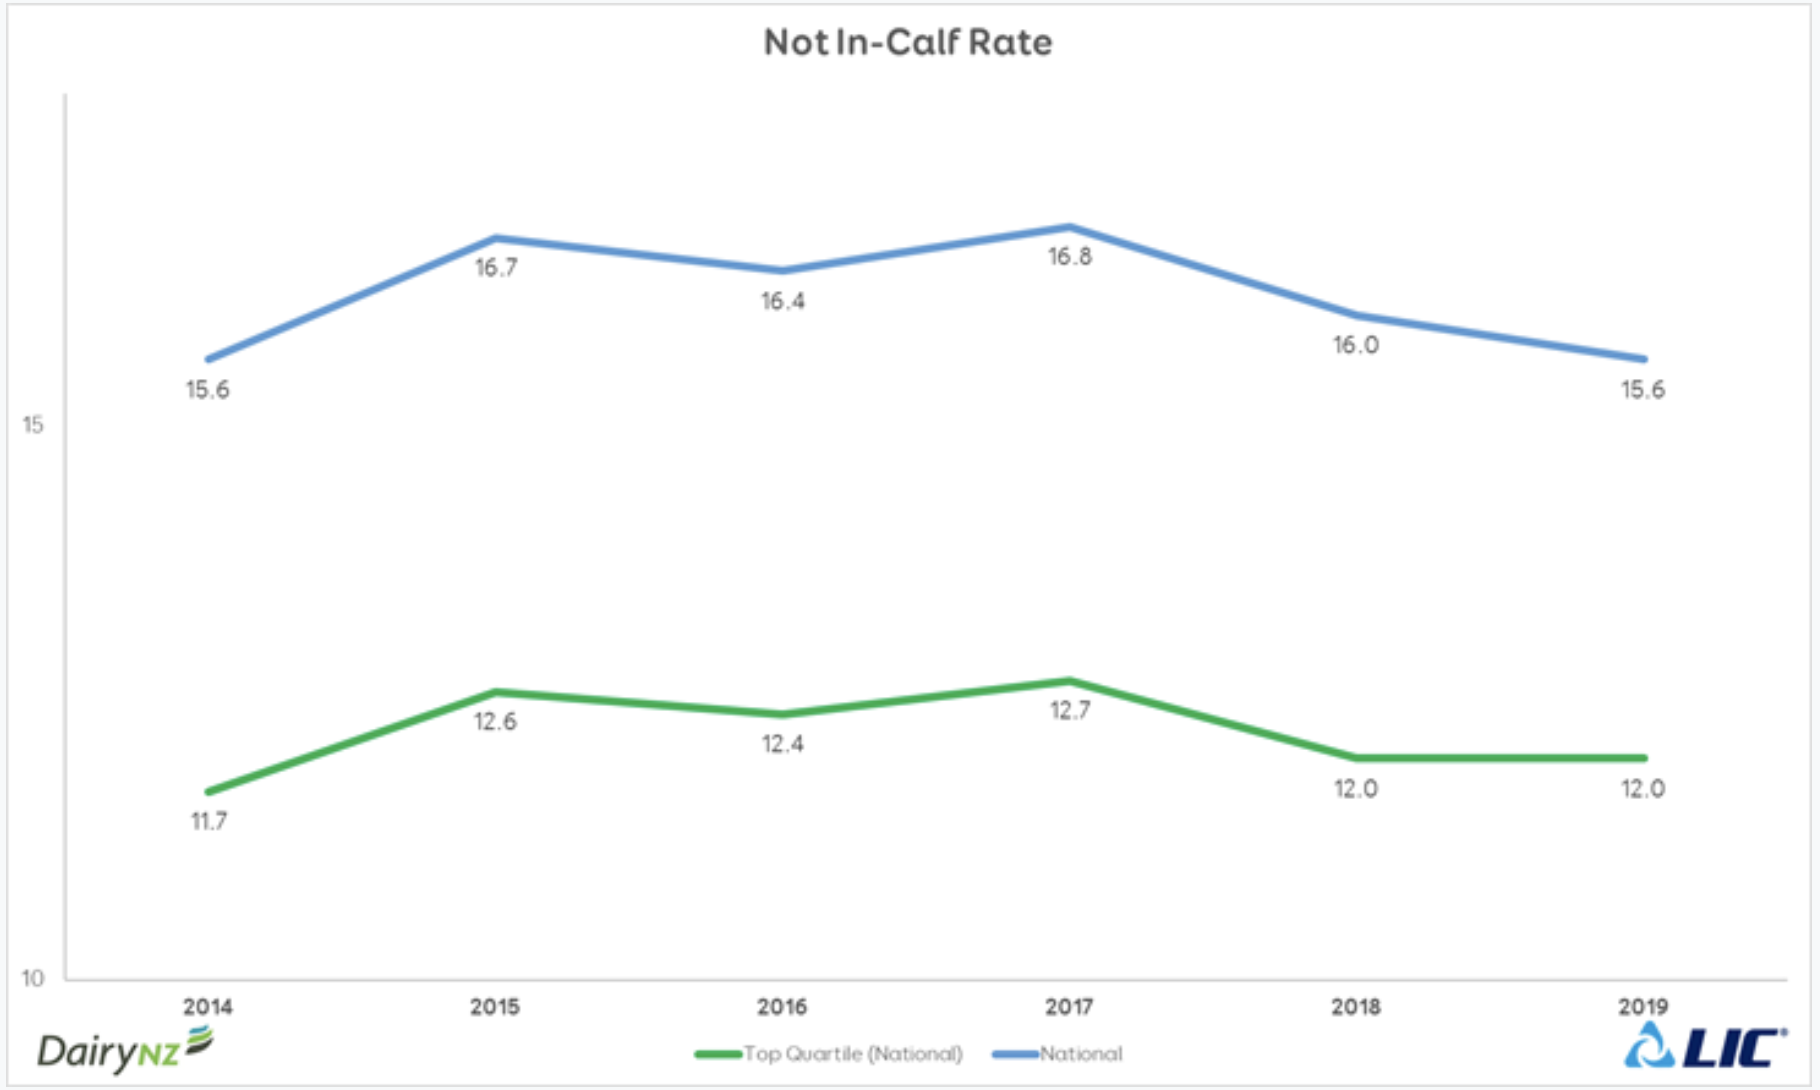 Not In-Calf rate